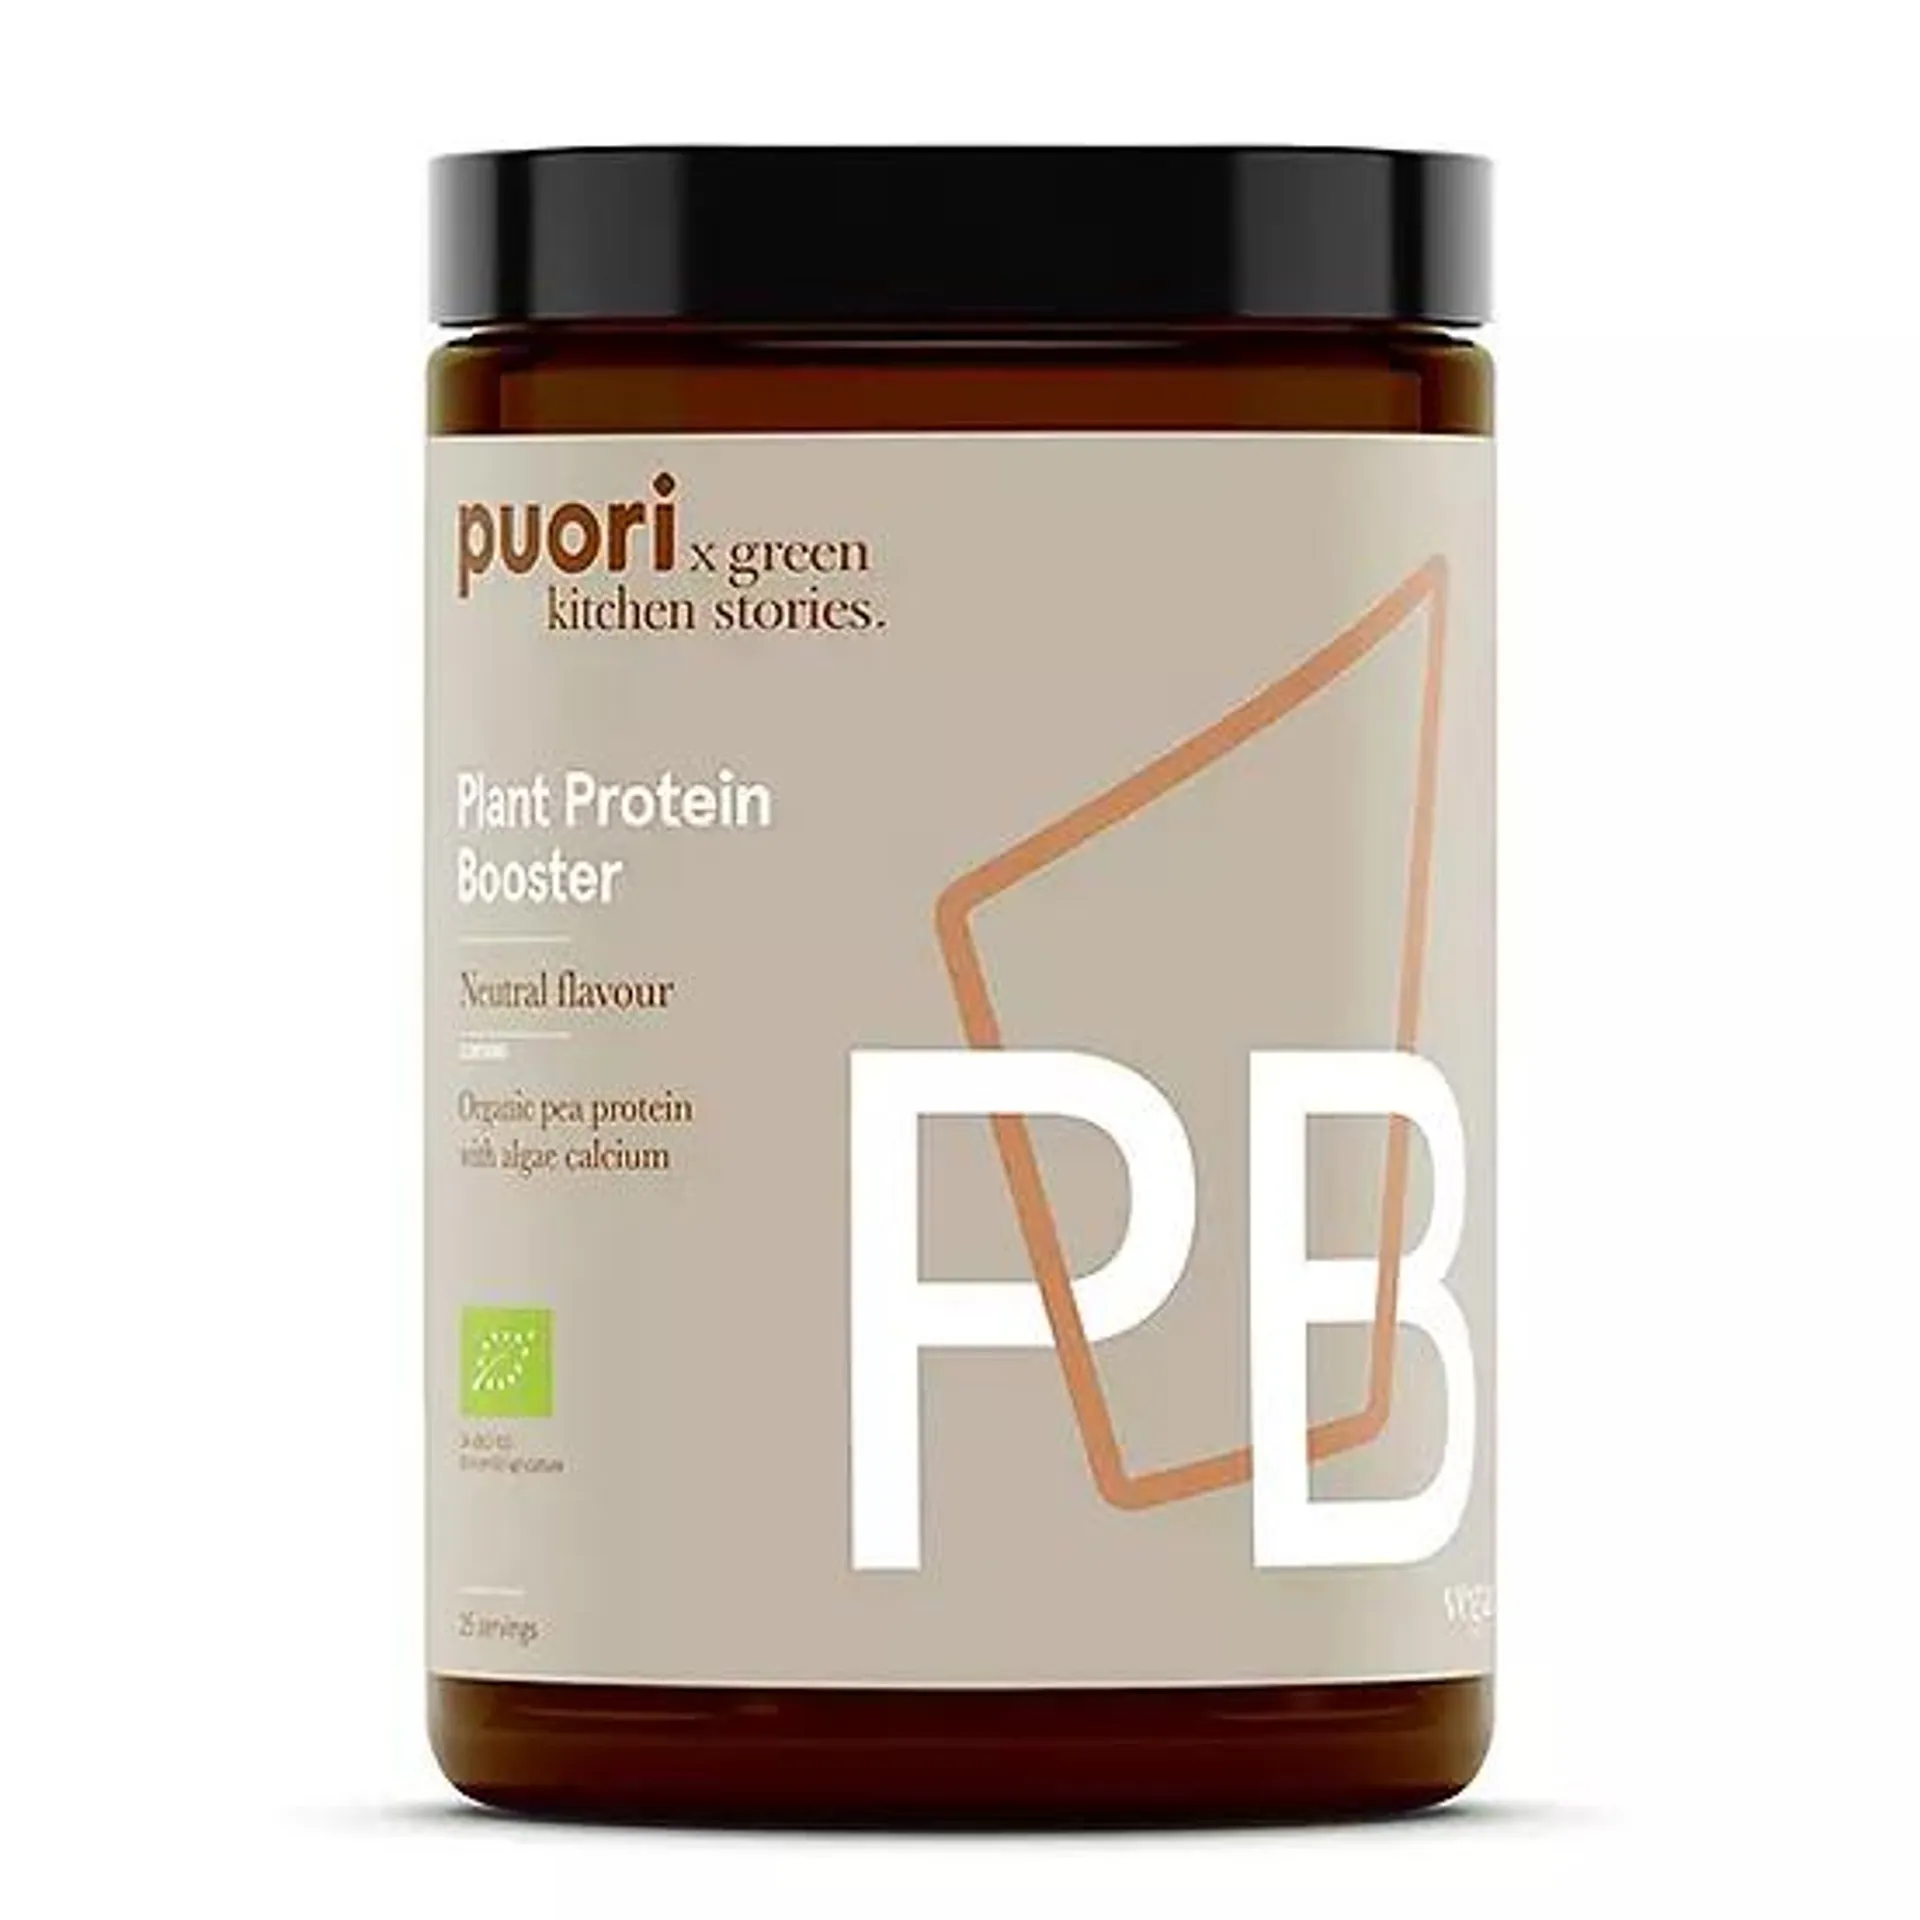 PB Organic Plant Protein Booster - 317gms by Puori